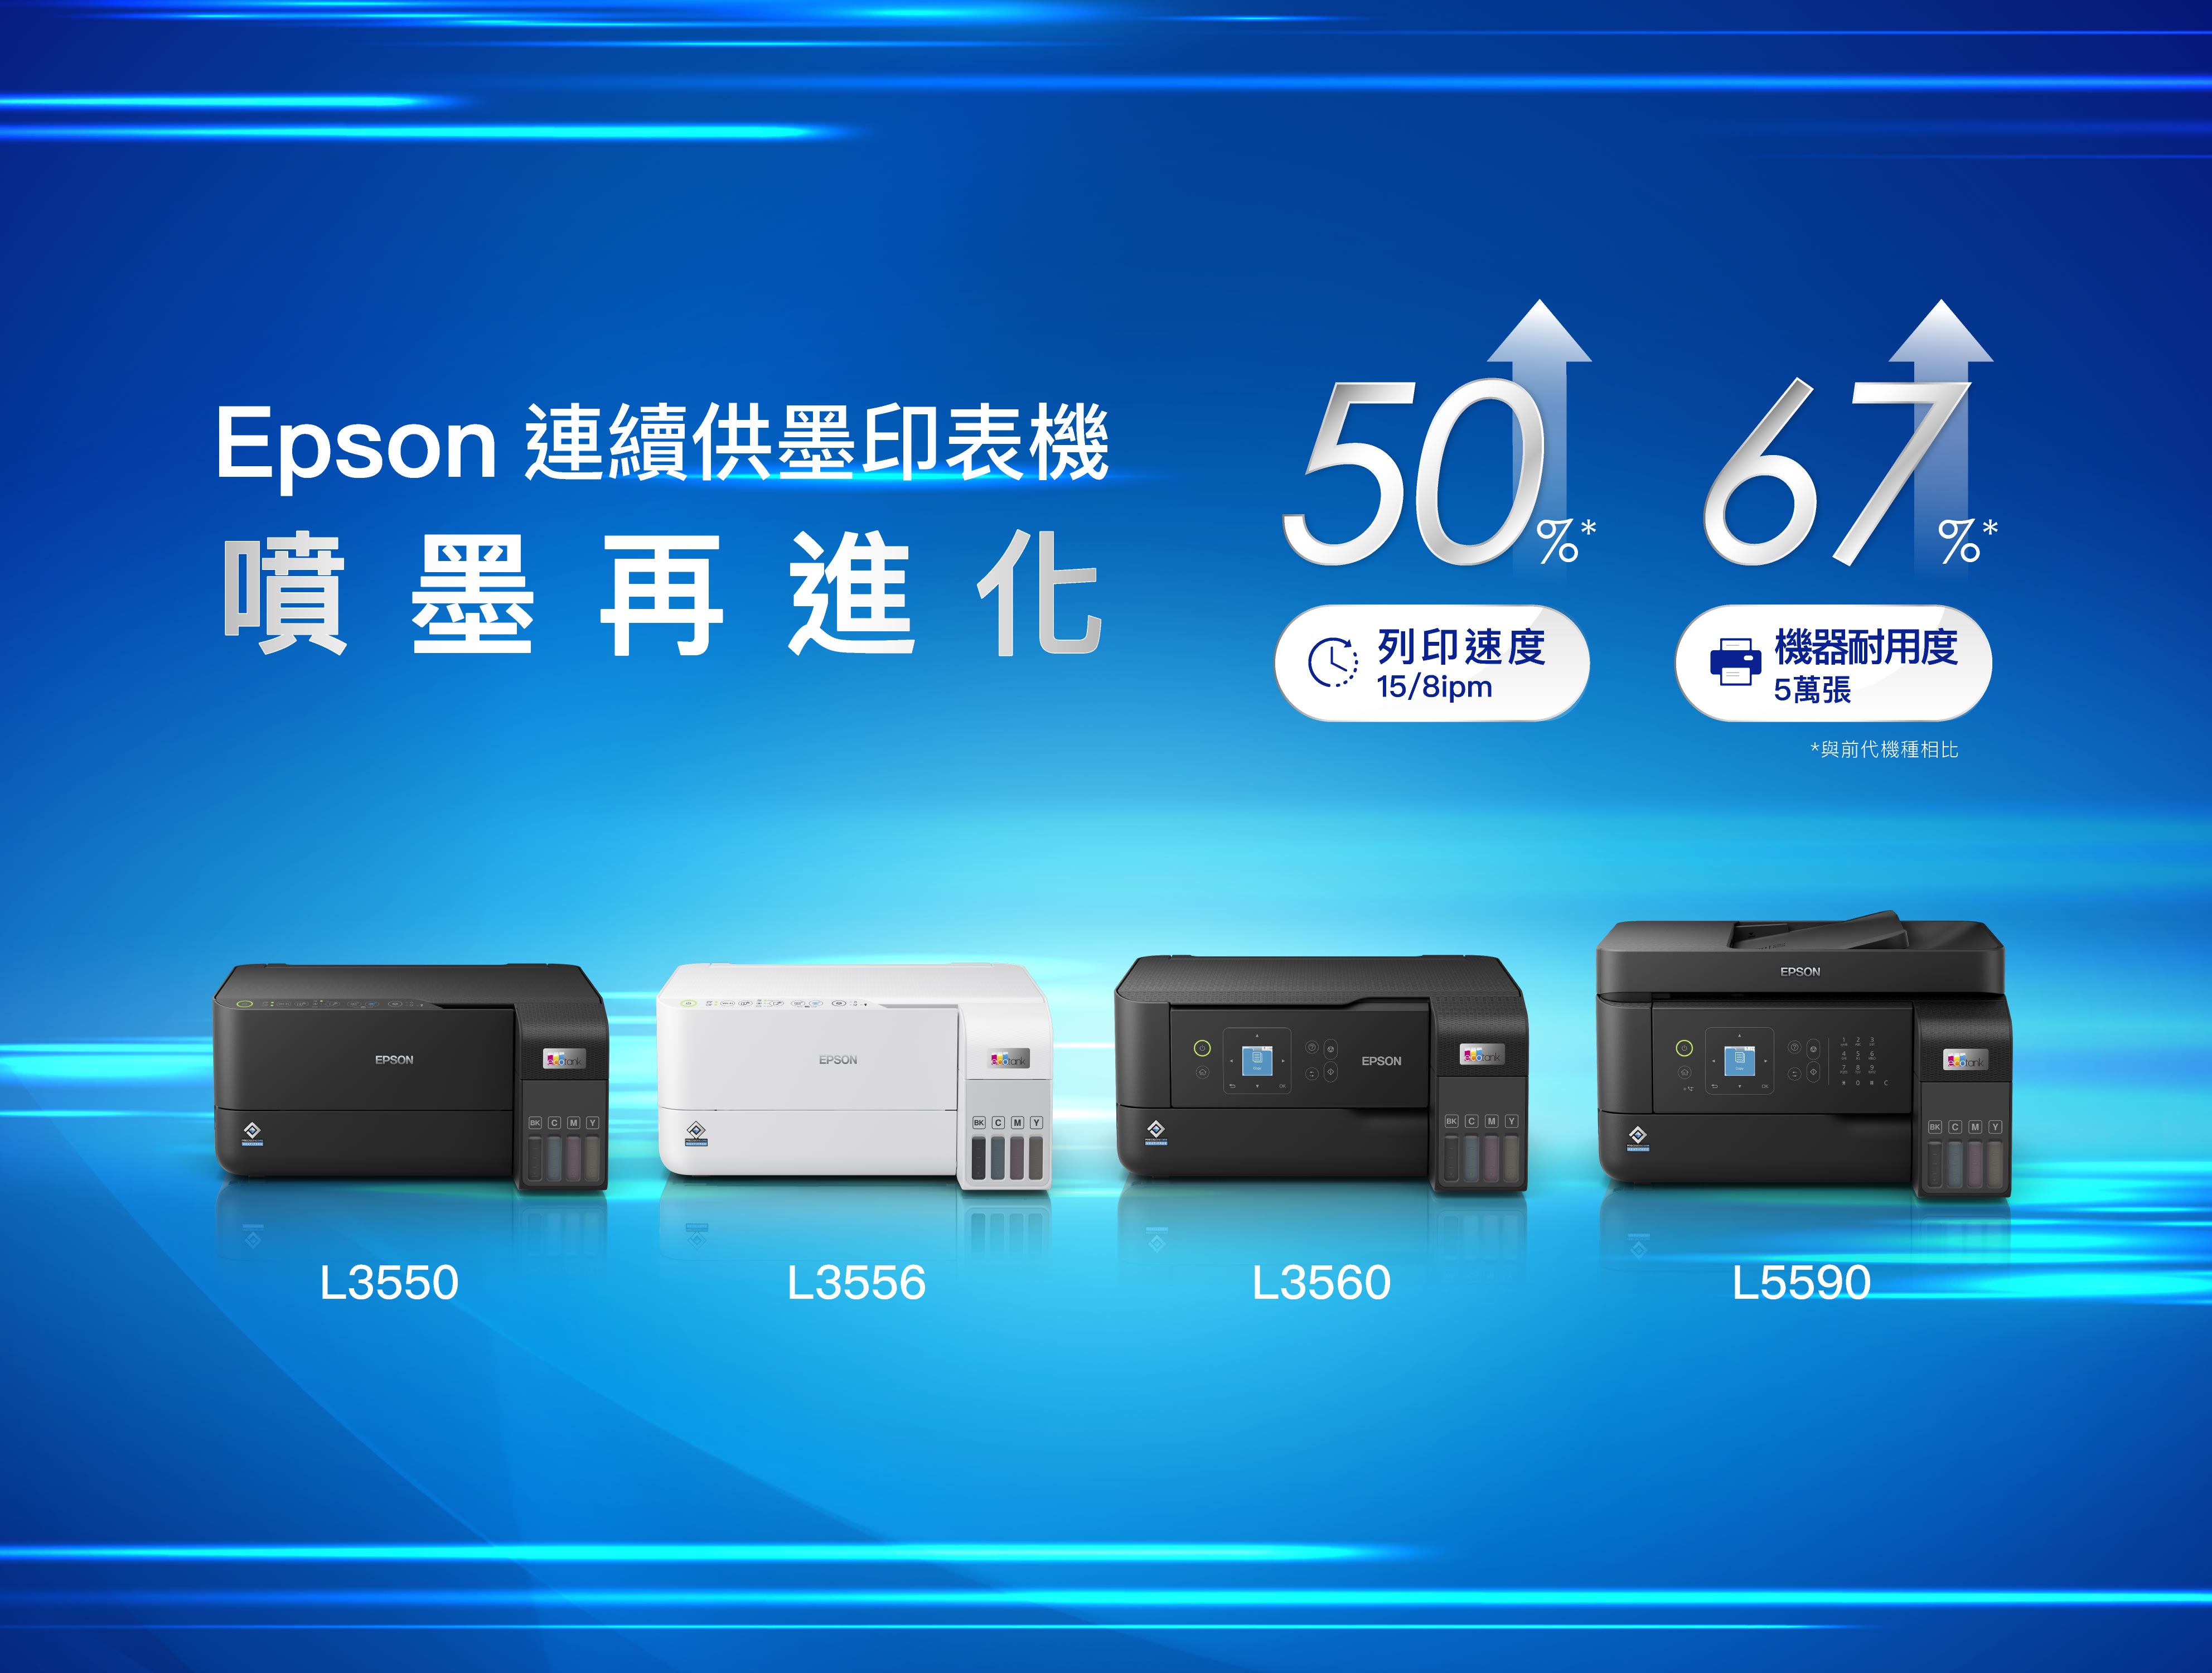 Epson 連續供墨印表機 噴墨再進化列印速度15/8ipmEPSONL355BecoankM YKEPSONL3556ecatankBK  M YtecotankEPSONL3560BK機器耐用度5萬張與前代機種相比EPSON5 67 8 9* 0 % L5590BKecotank